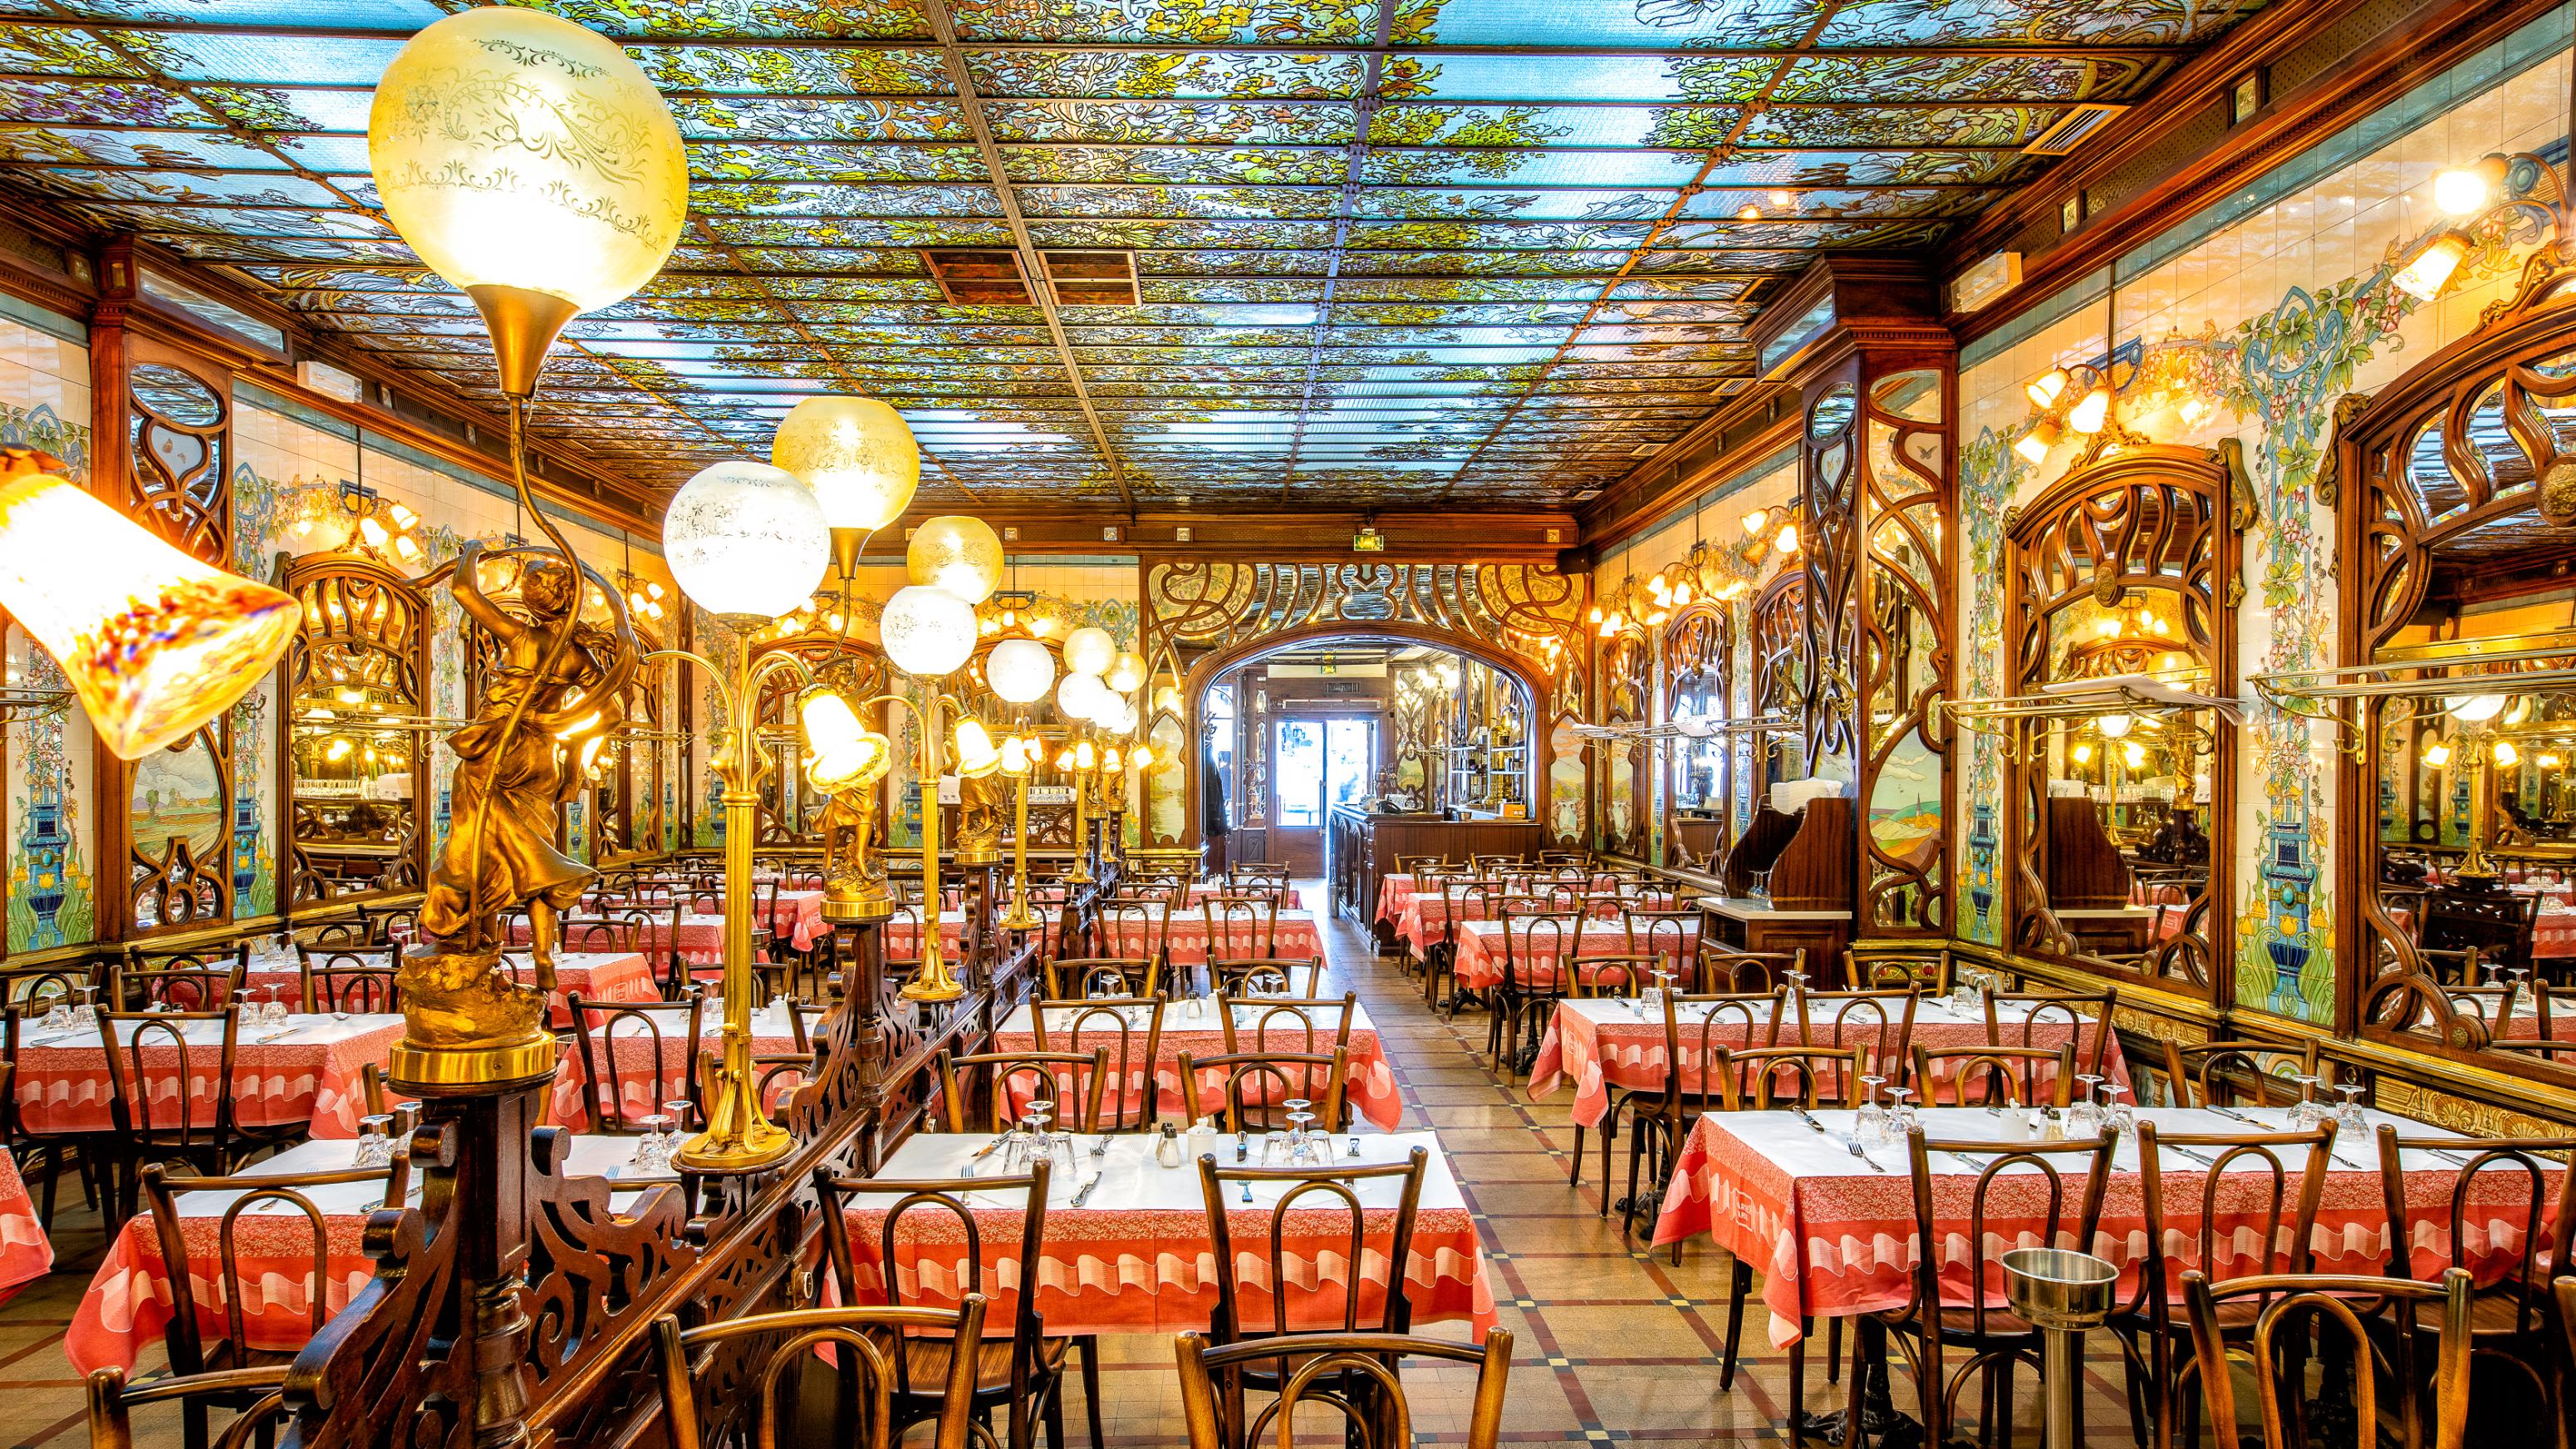 Bouillon restaurants of serve retro French classics at bargain prices CNN